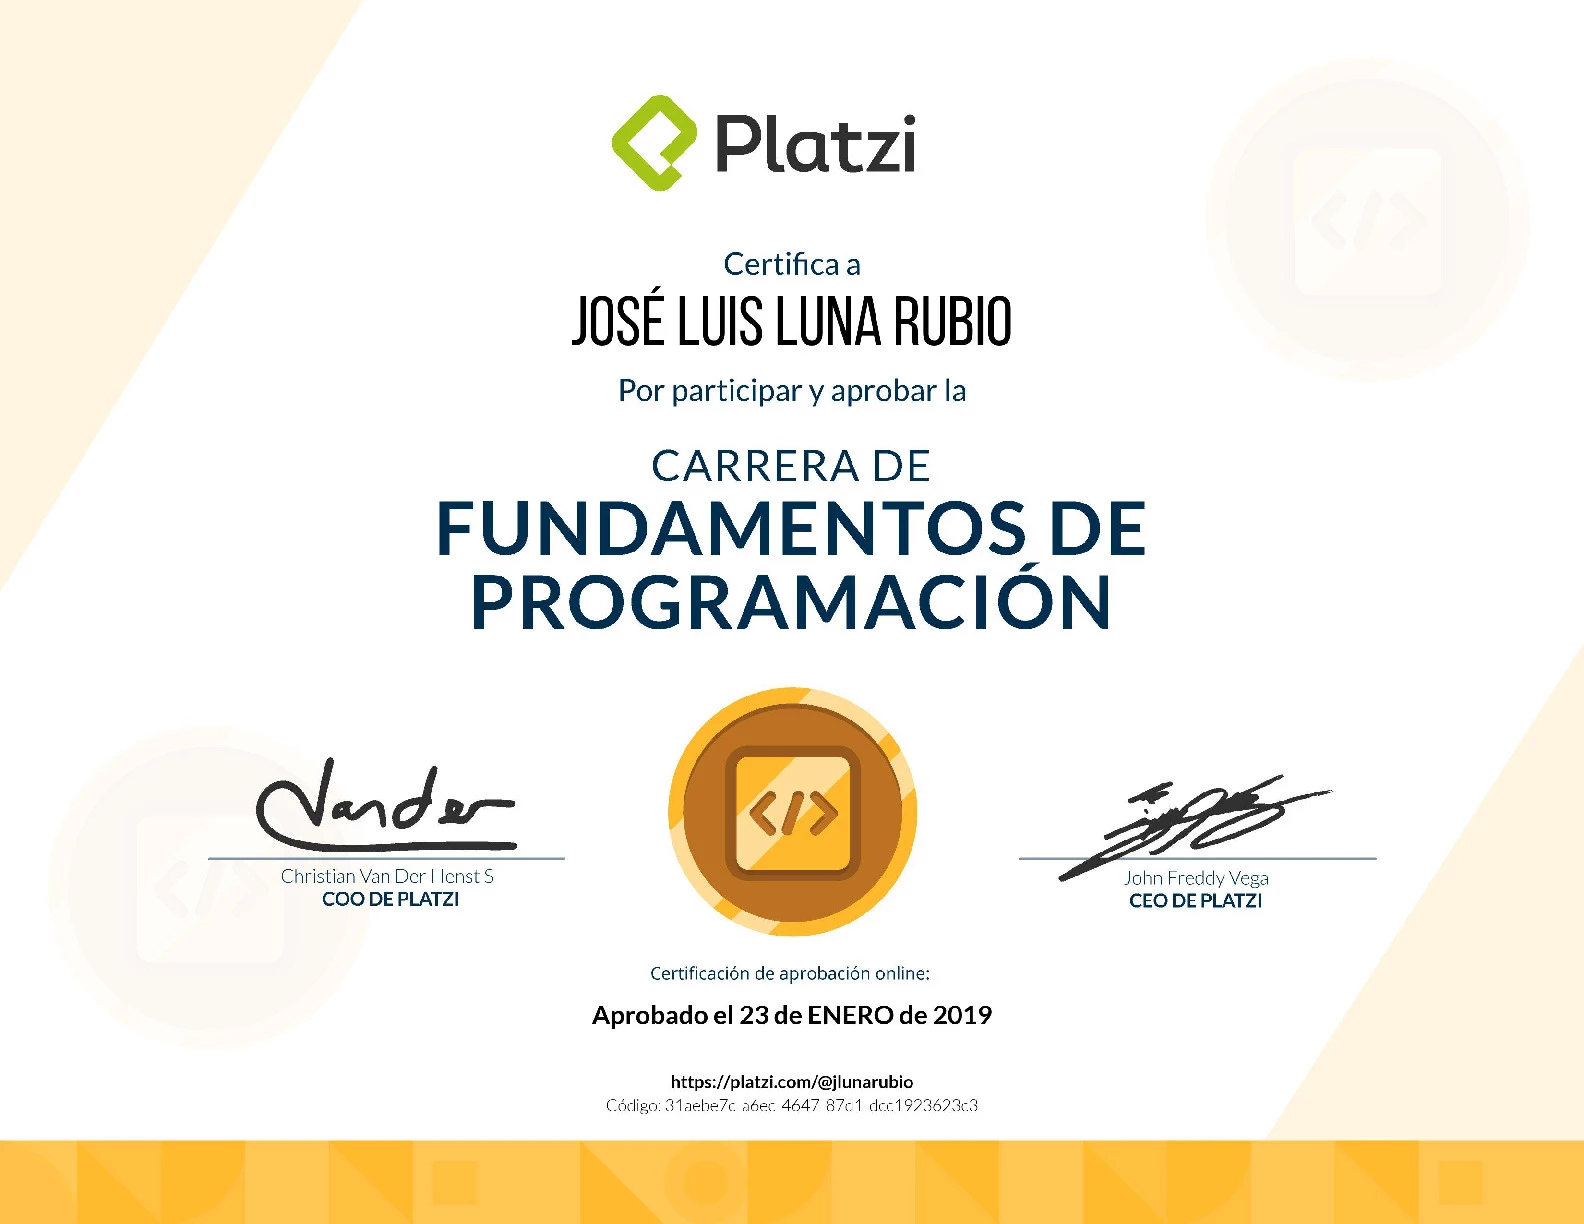 Carrera Platzi Jose Luis Luna Rubio - Fundamentos de Programacion